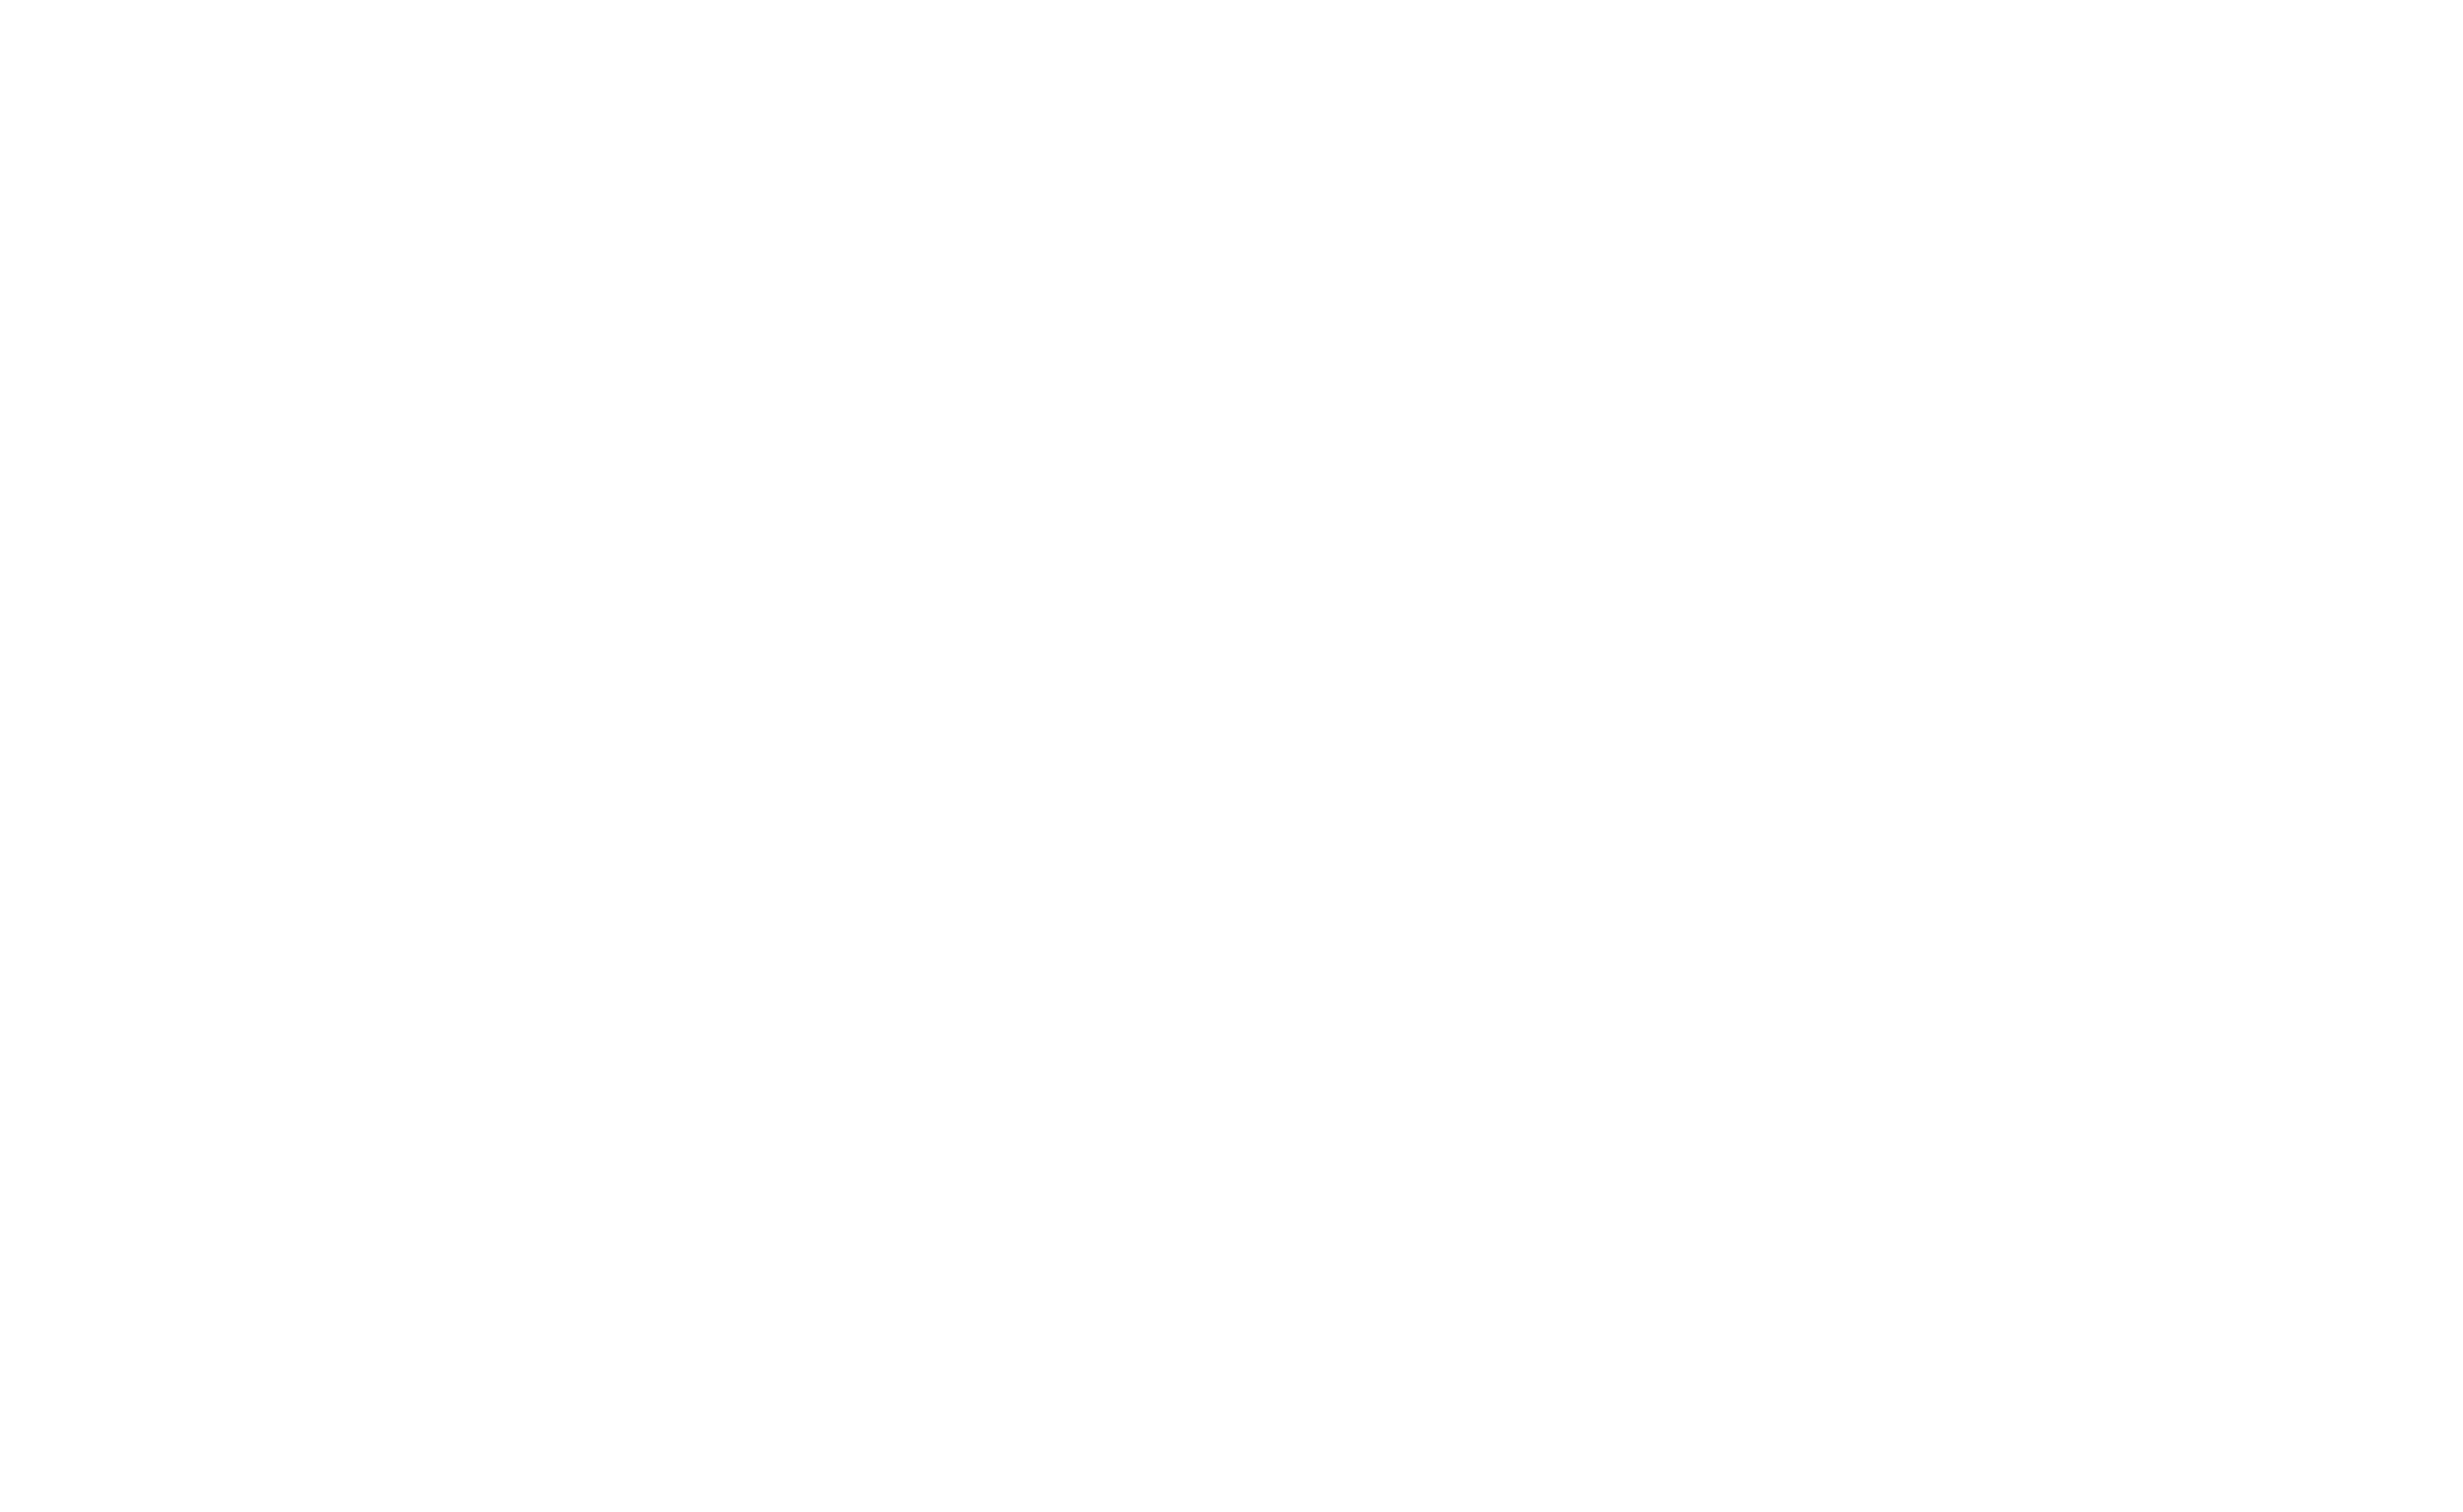 Dave Nachmanoff